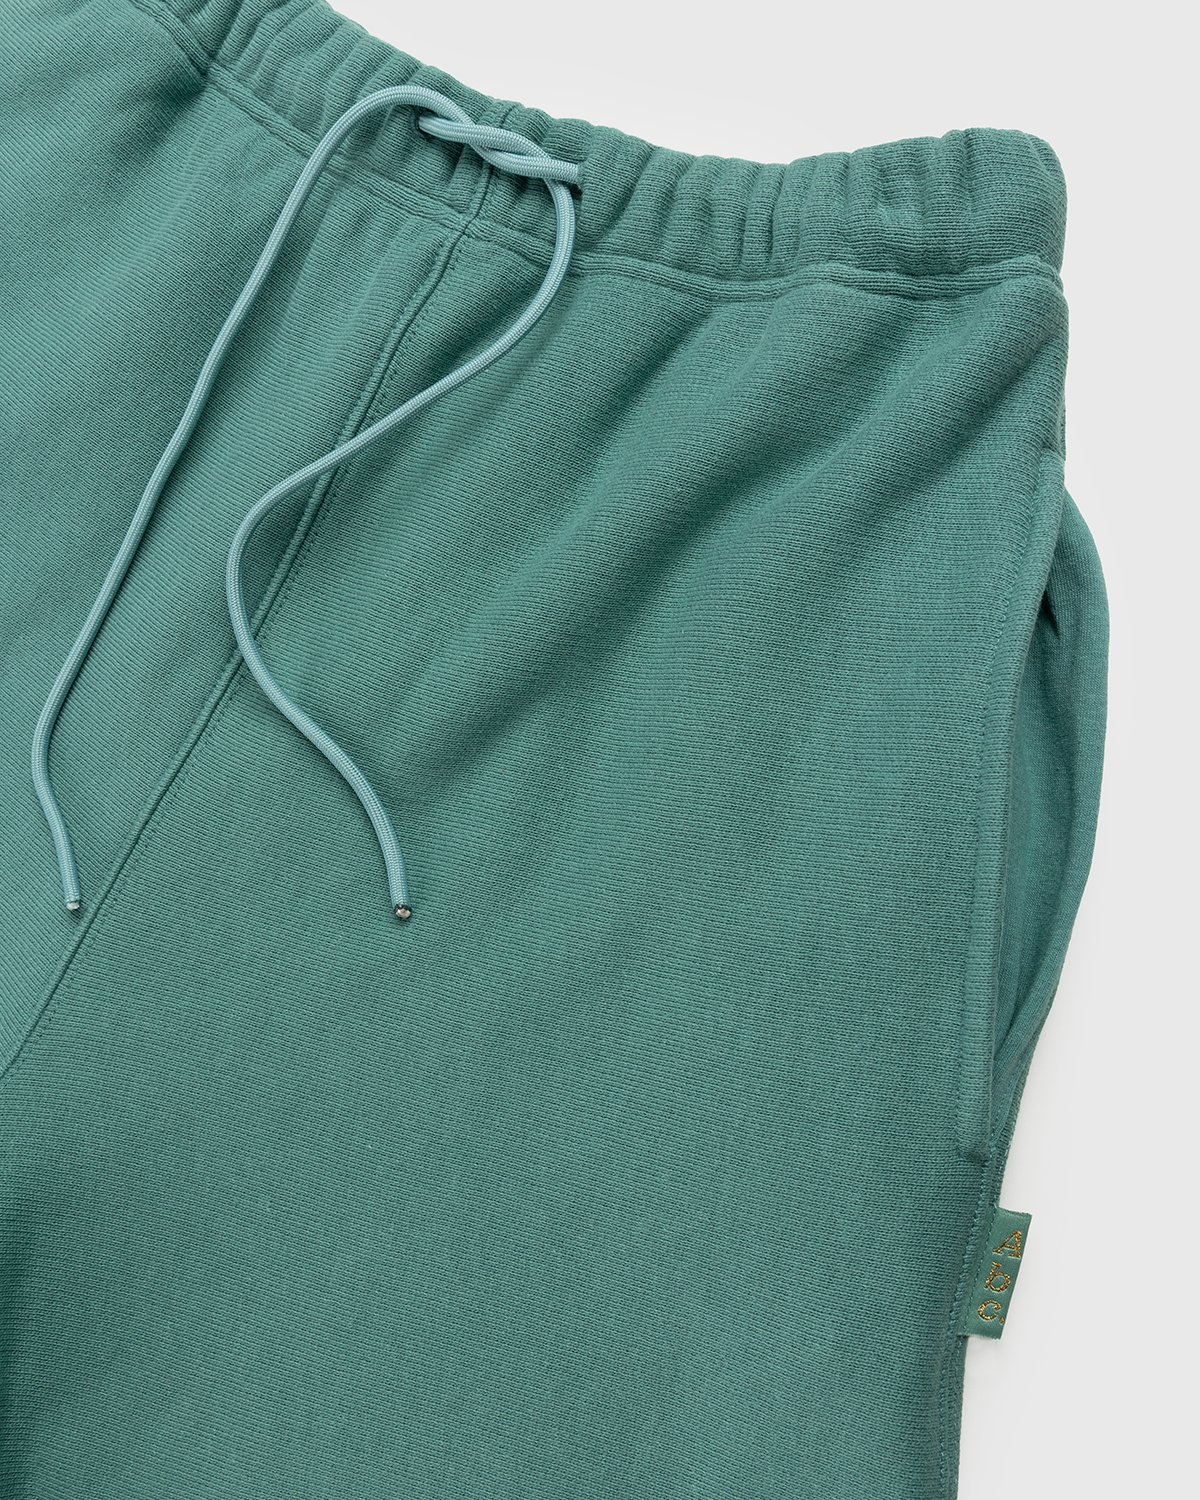 Abc. - Fleece Sweatshorts Apatite - Clothing - Green - Image 3